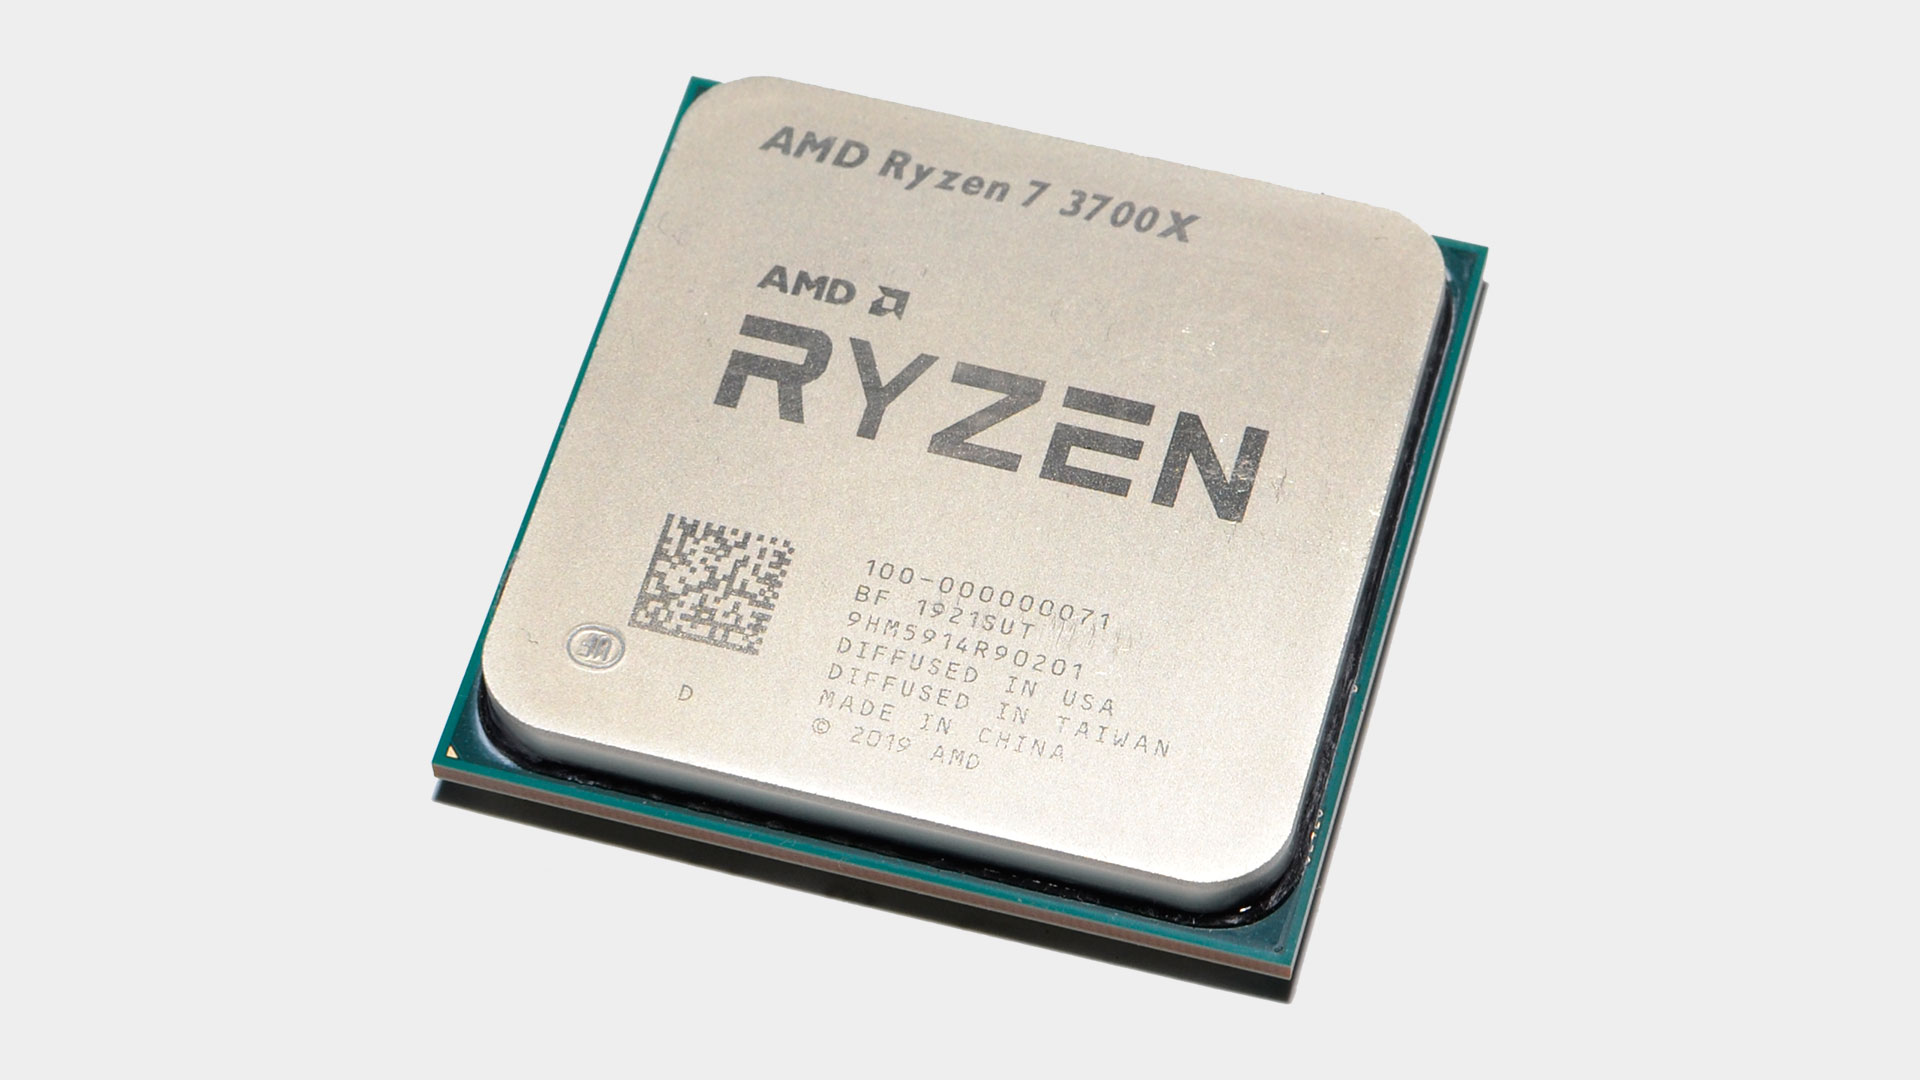 Amd ryzen 7 3700x 8 core. AMD Ryzen 7 3700x. AMD Ryzen 7 Pro 3700. AMD Ryzen 7 3700x am4, 8 x 3600 МГЦ, OEM. AMD Risen 7 3700.